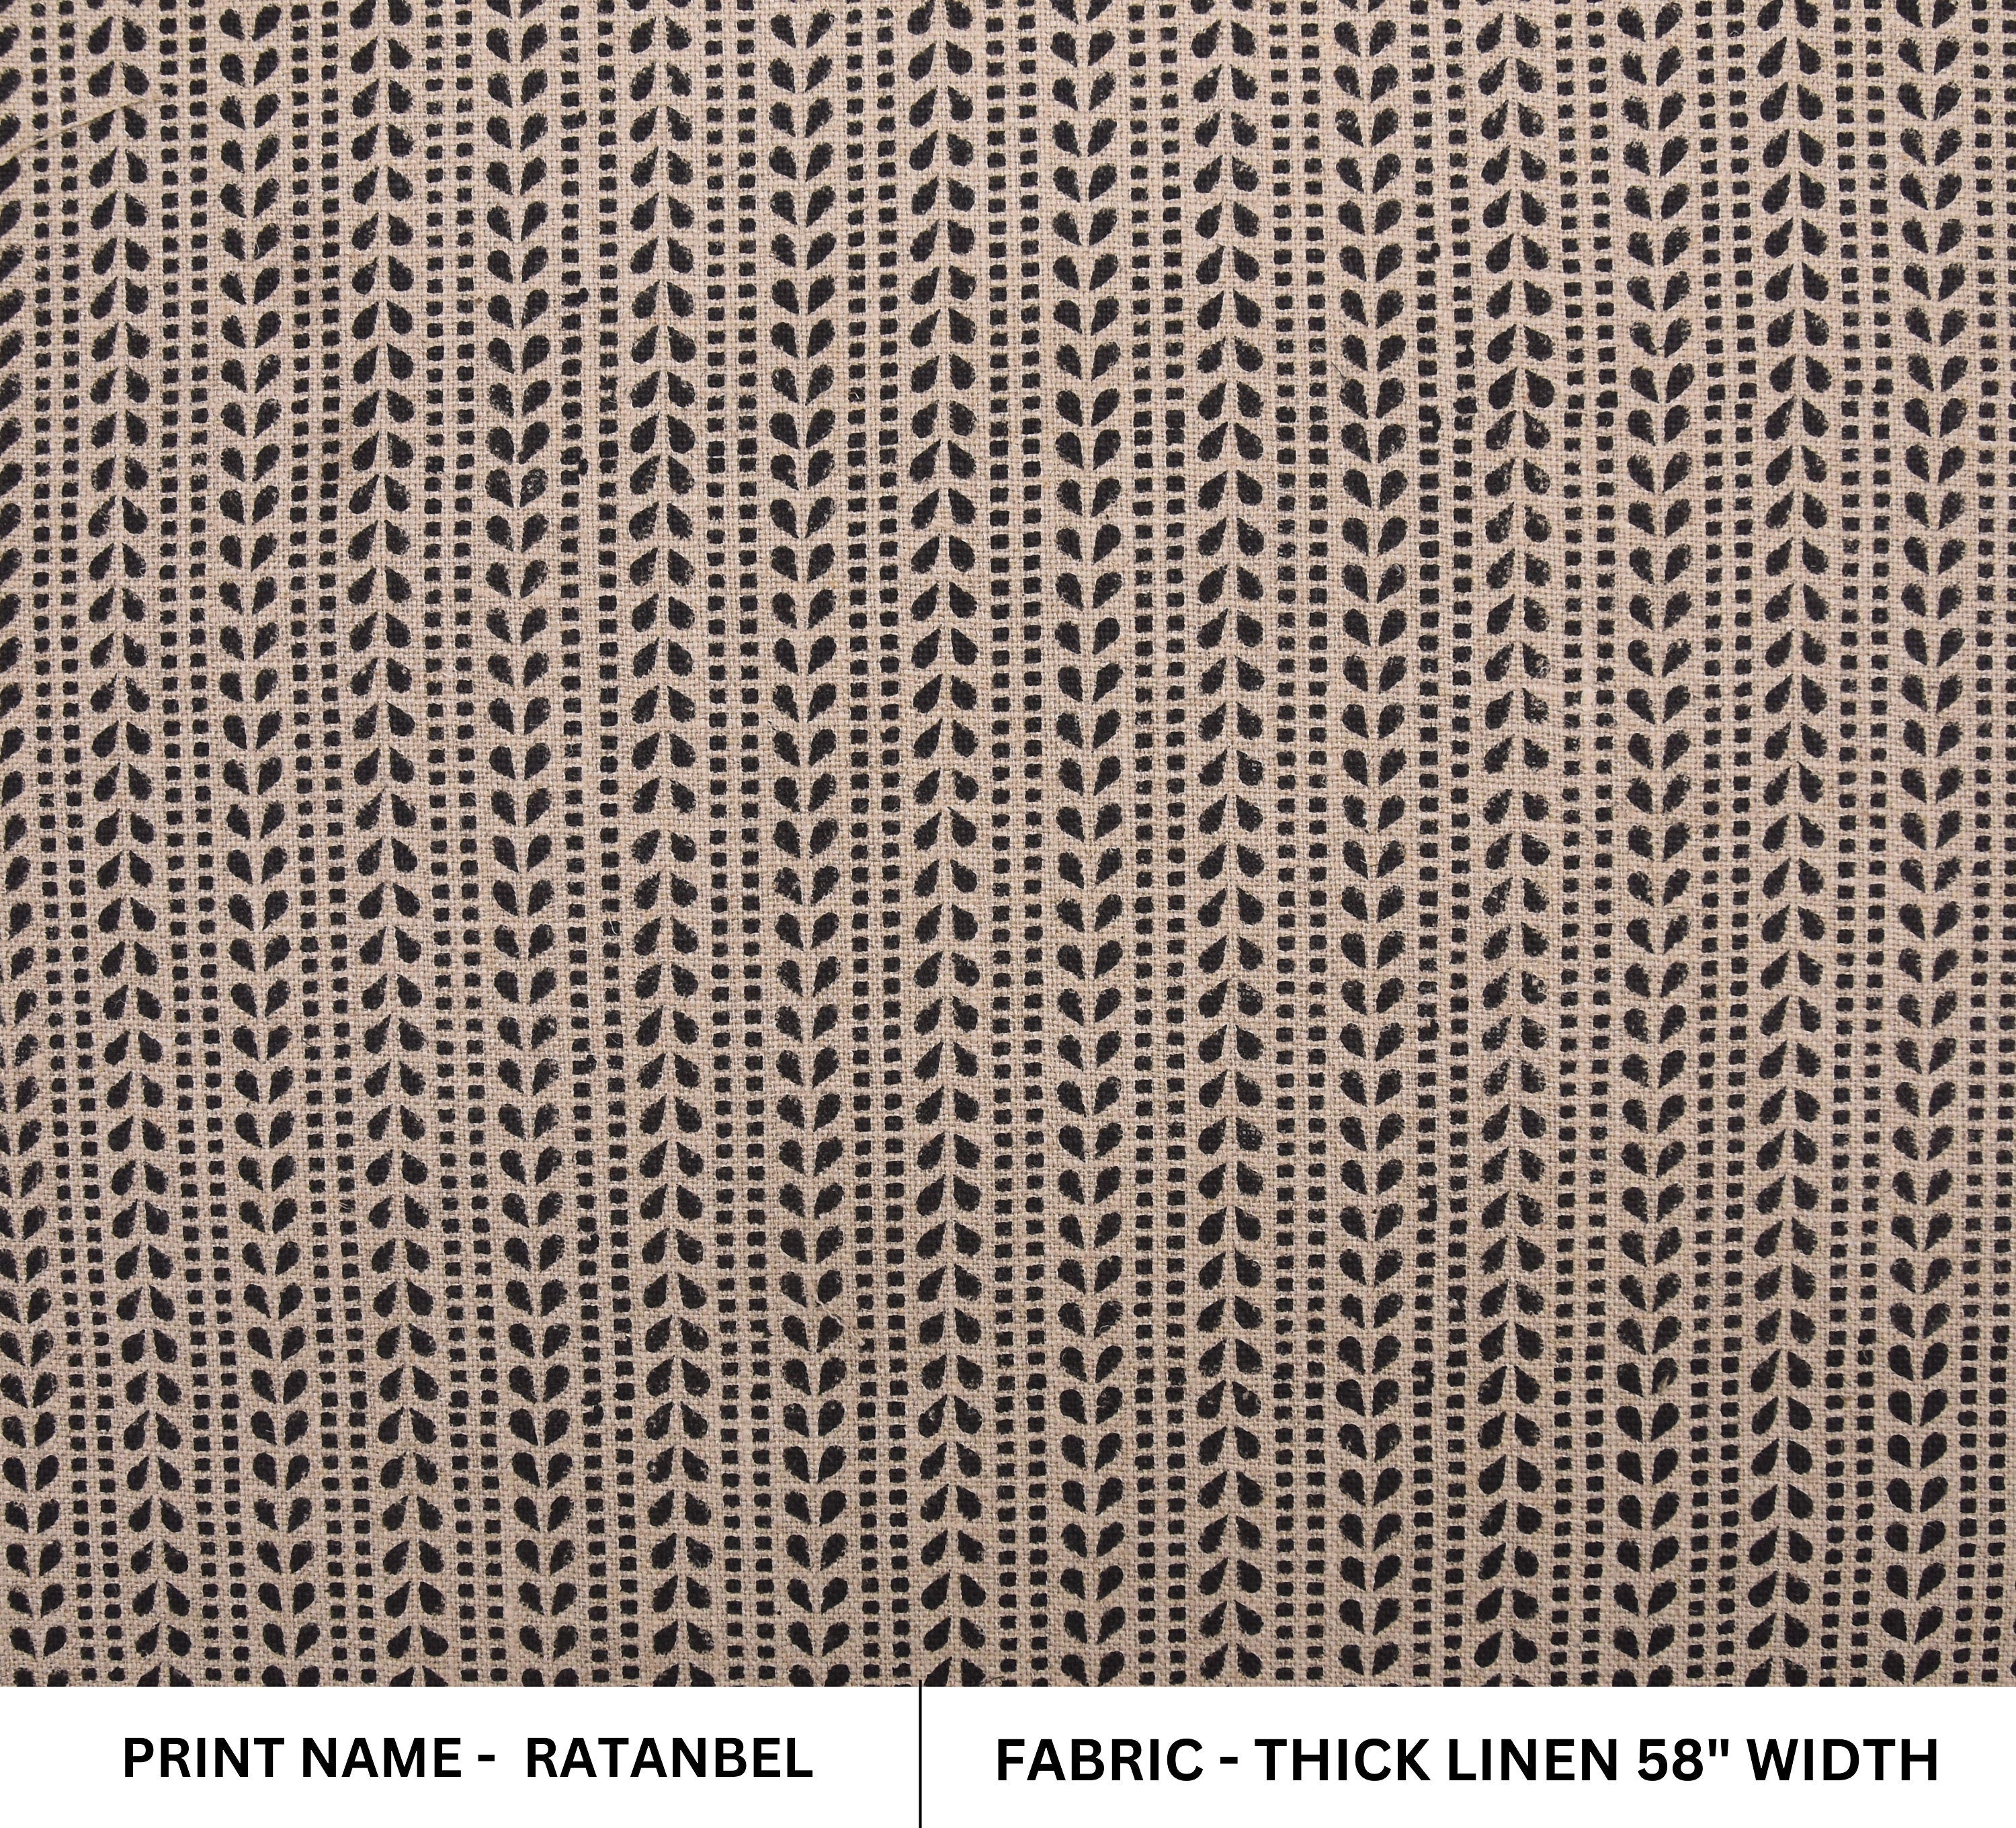 Indian Fabric Block Black Leaf Print, Thick Linen 58" Wide, farmhouse decorative home decor throw pillow cover - RATANBEL